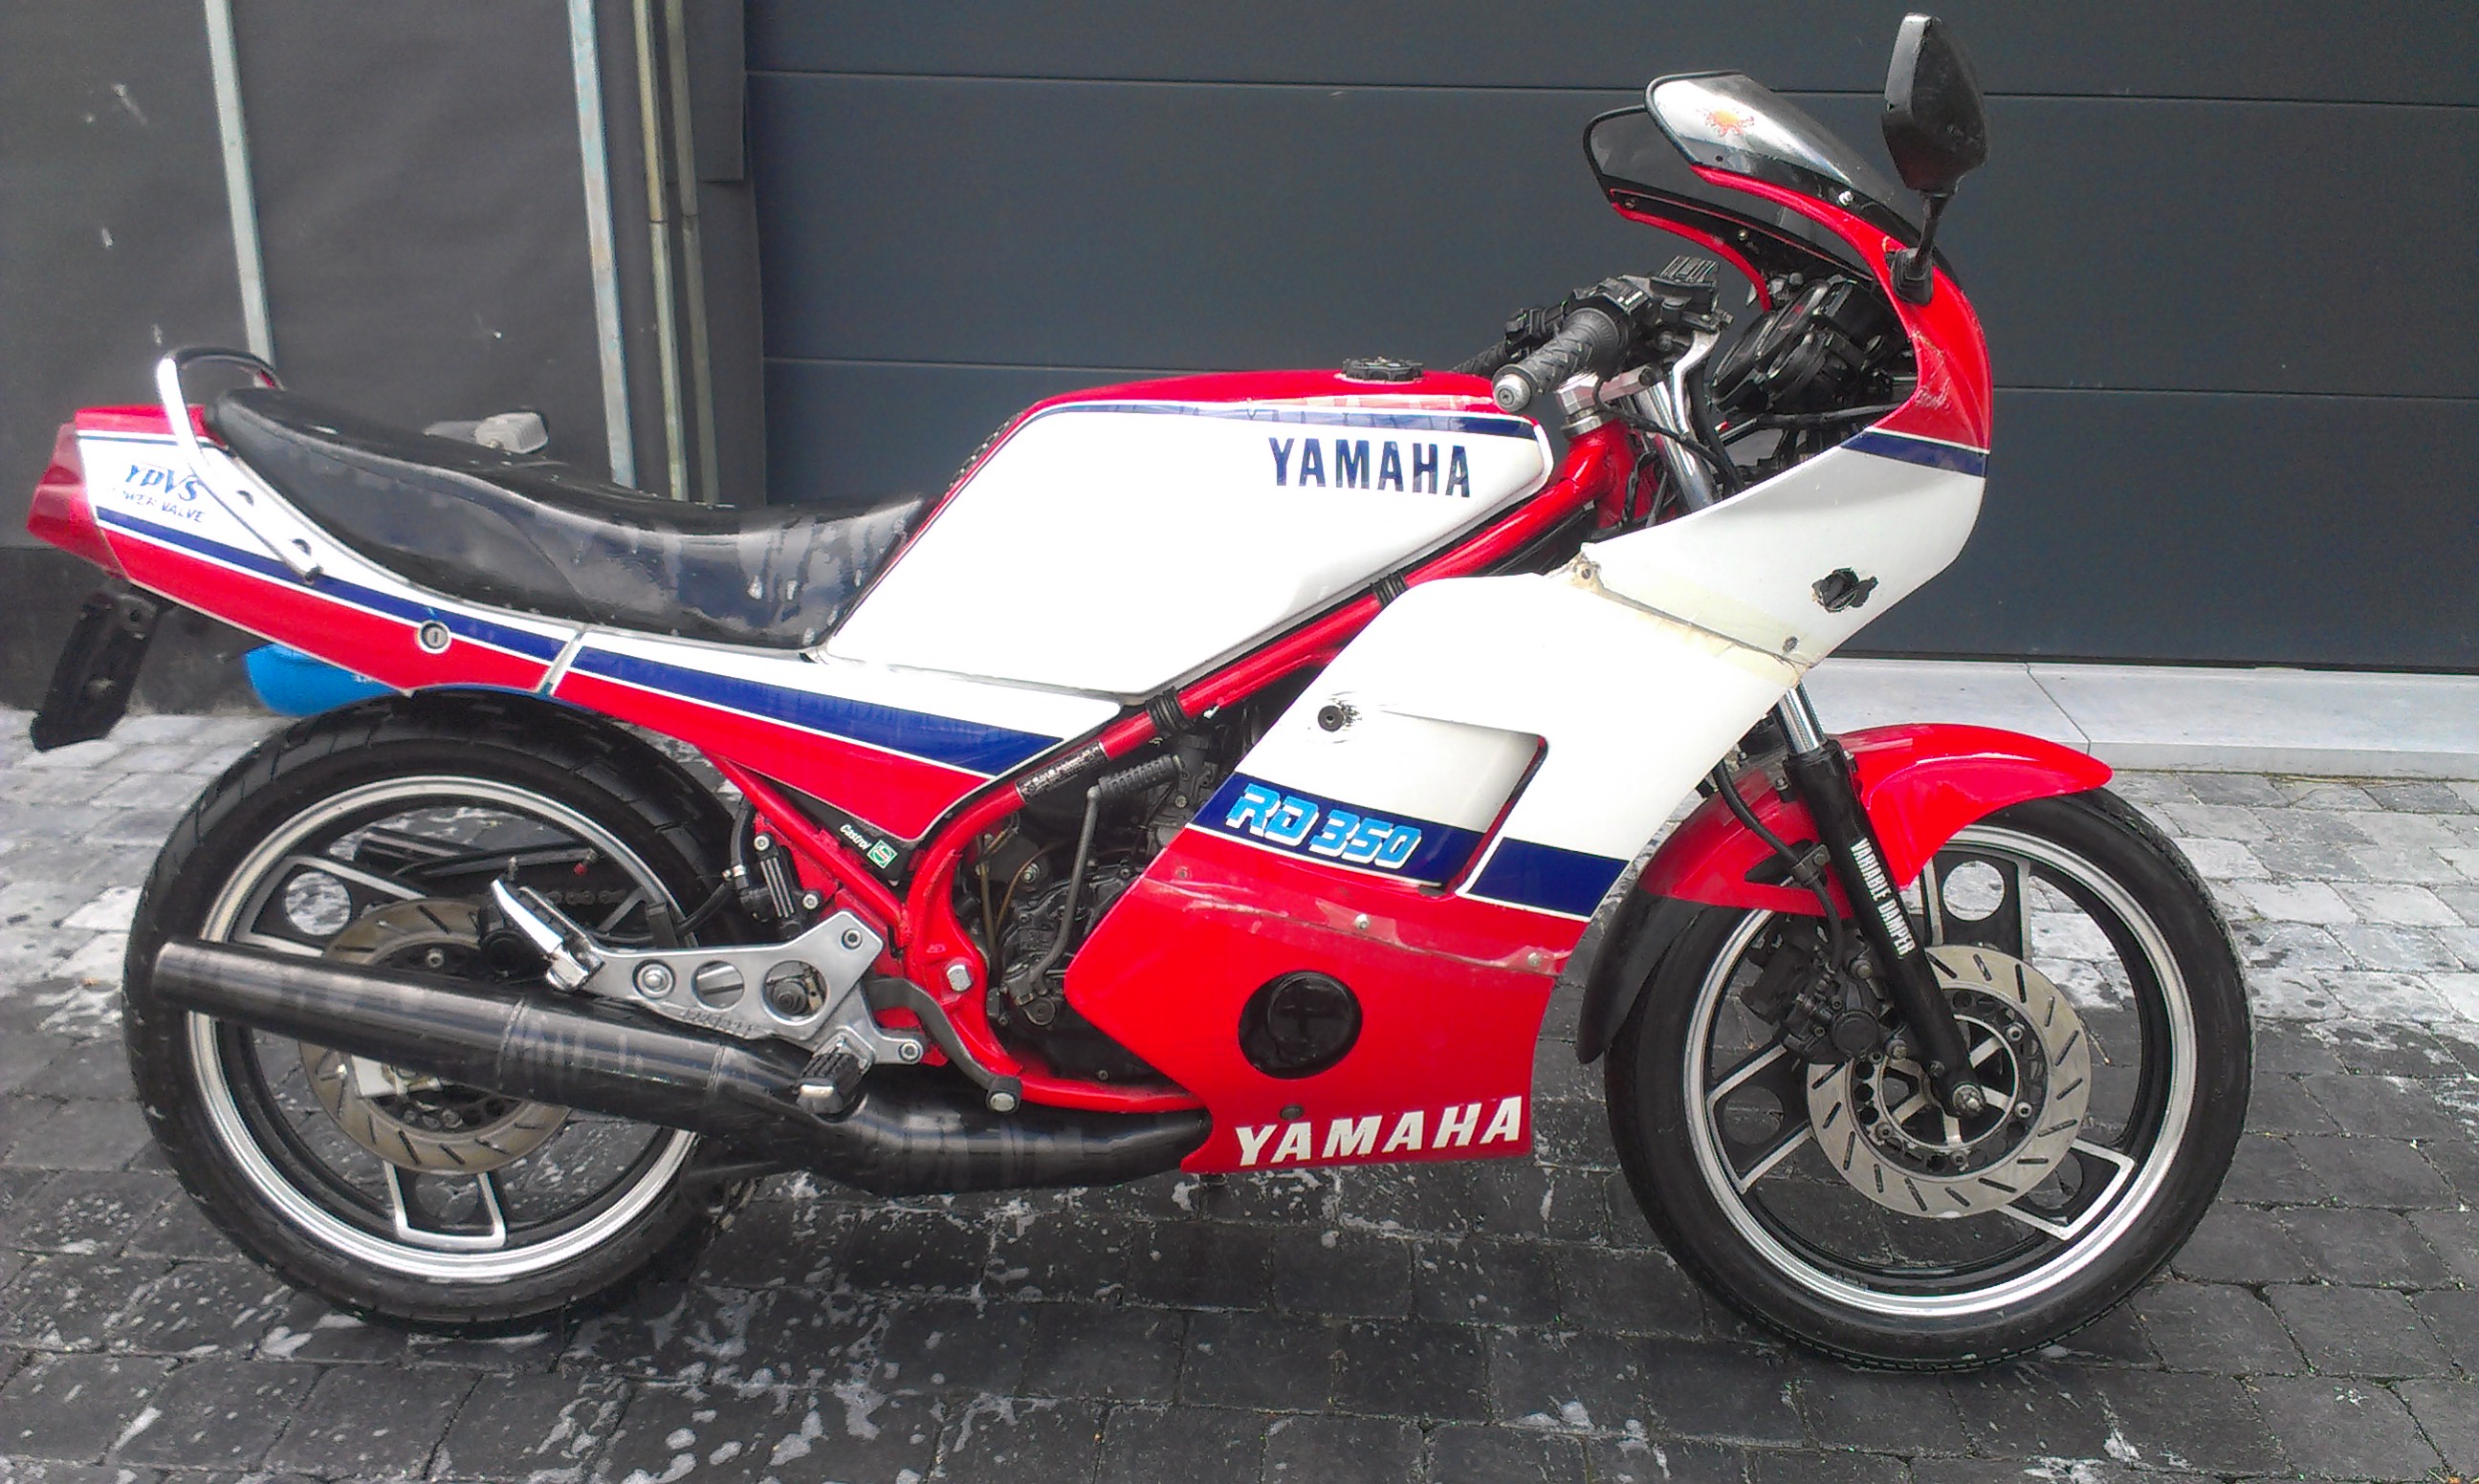 Yamaha RD 350 F (reduced effect) 1989 photo - 2